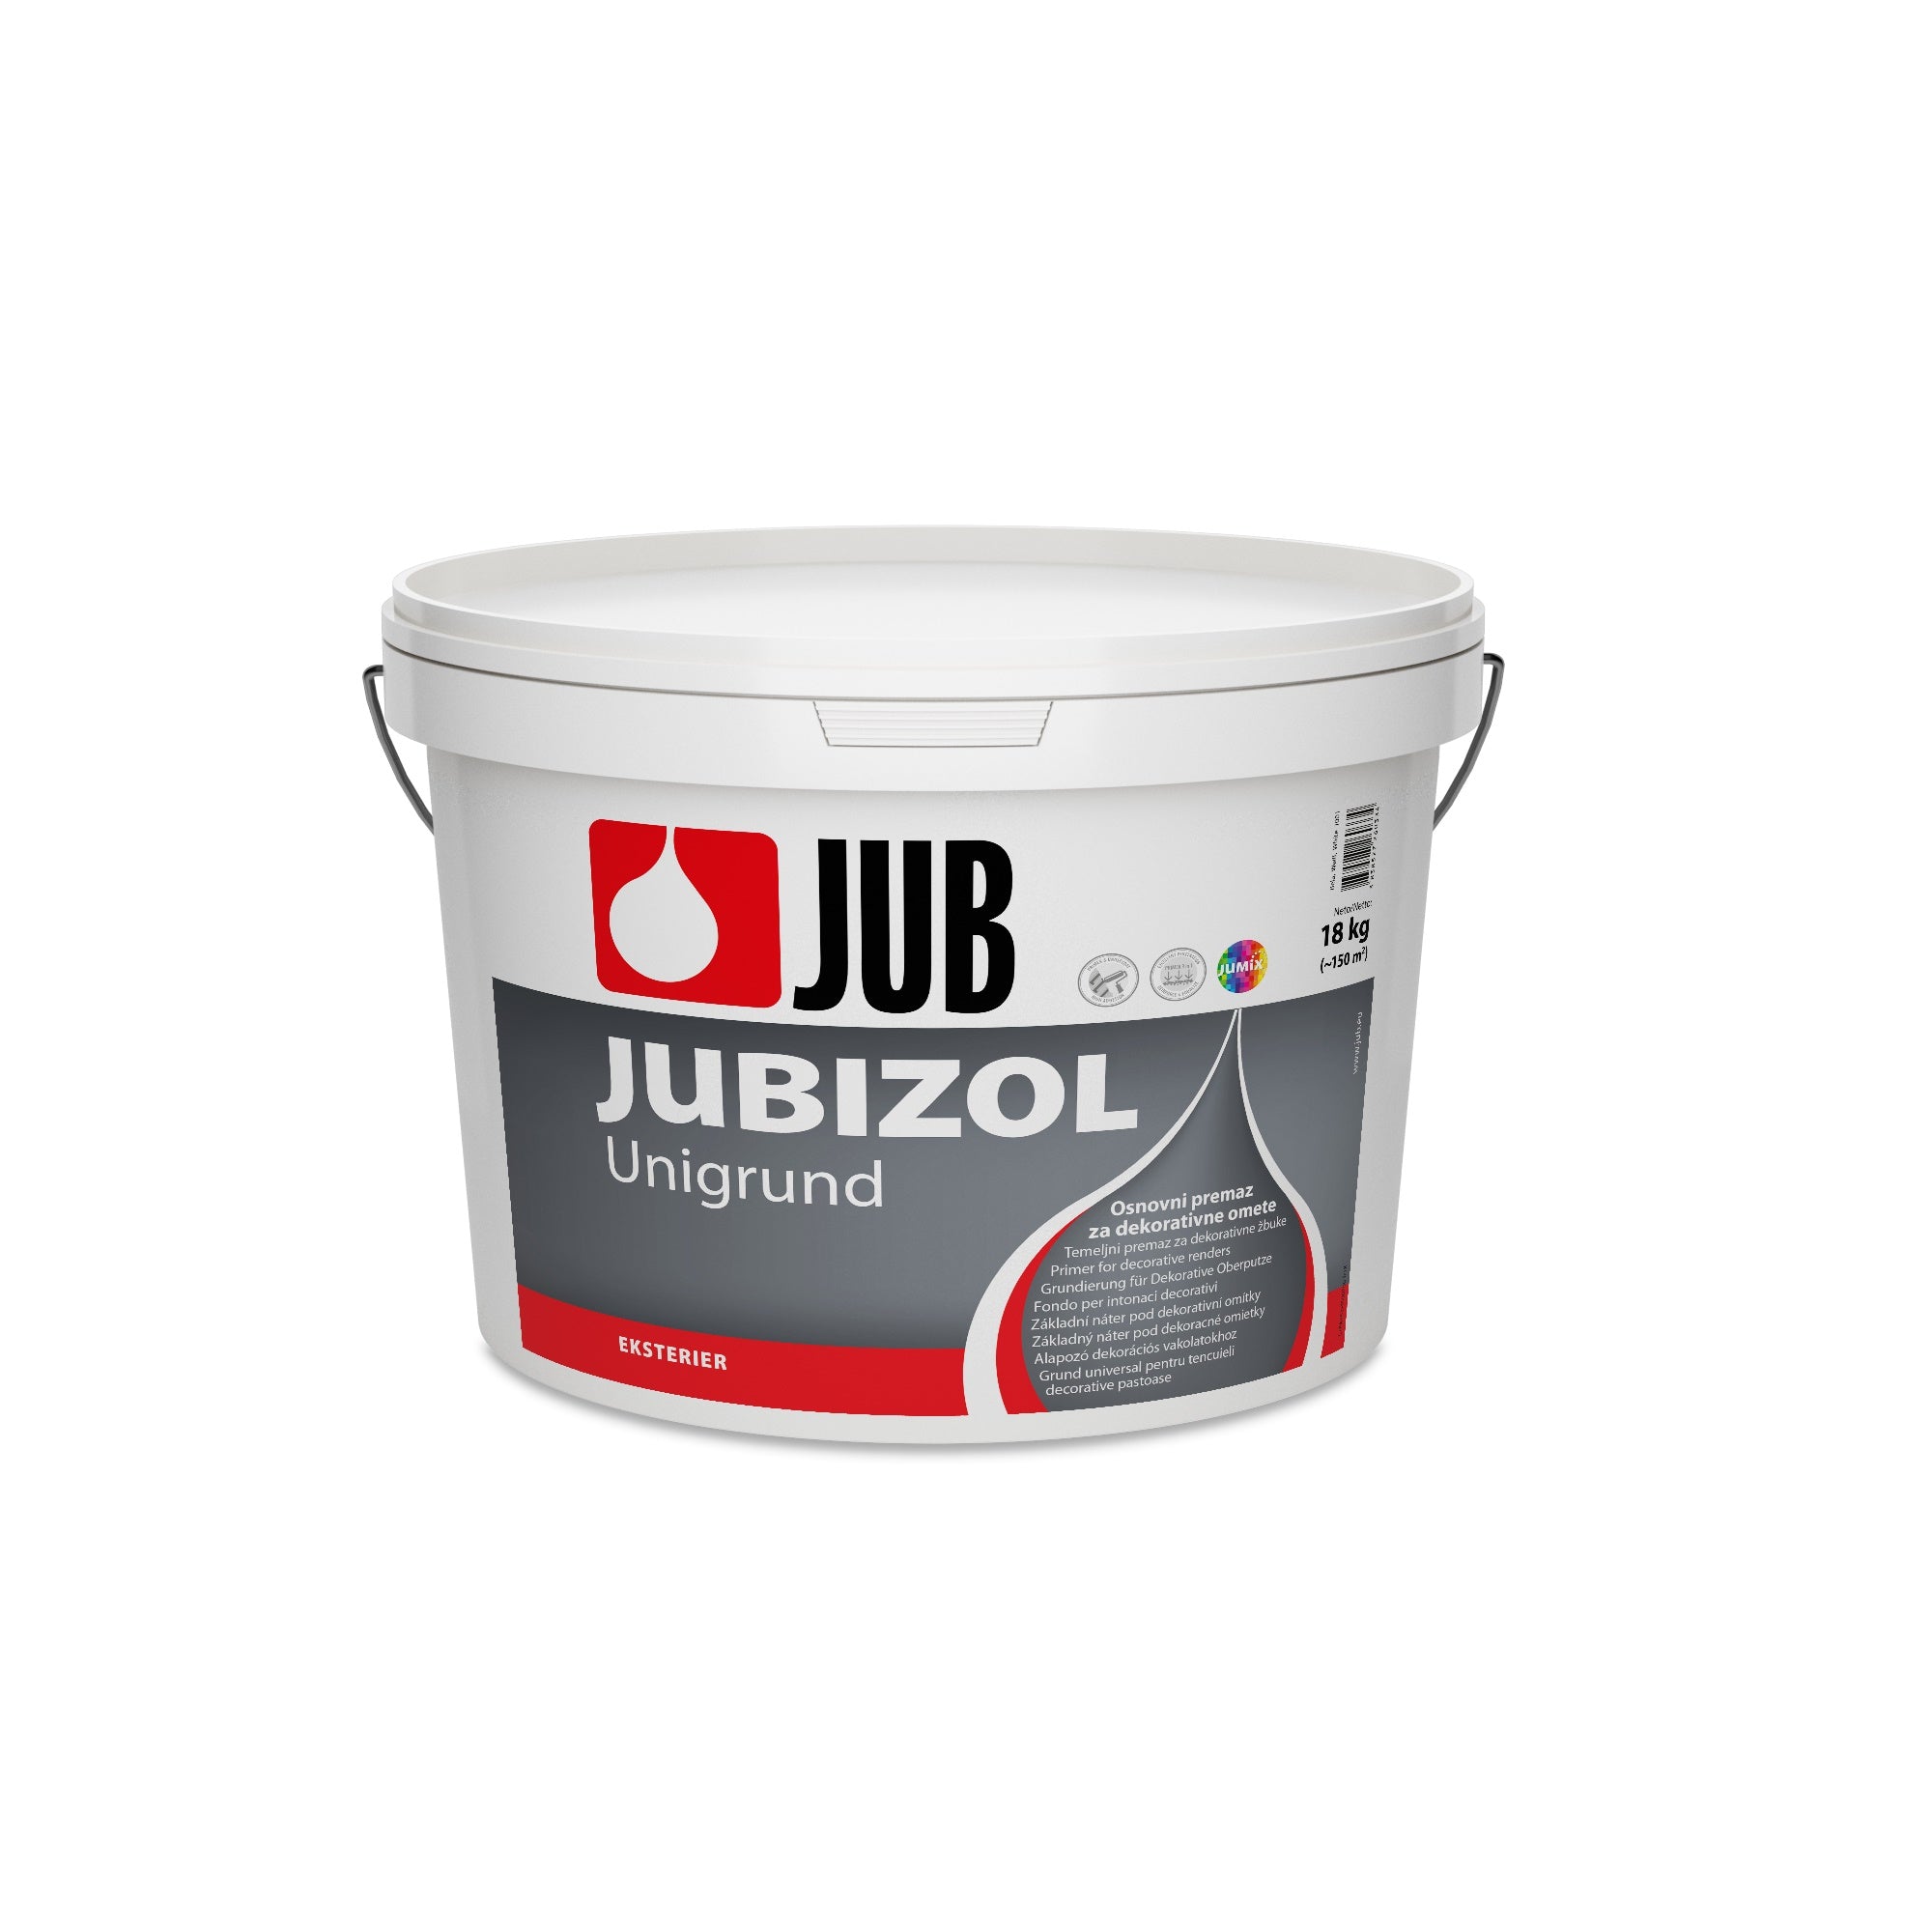 JUB JUBIZOL Unigrund biely univerzálny základný náter 2 kg